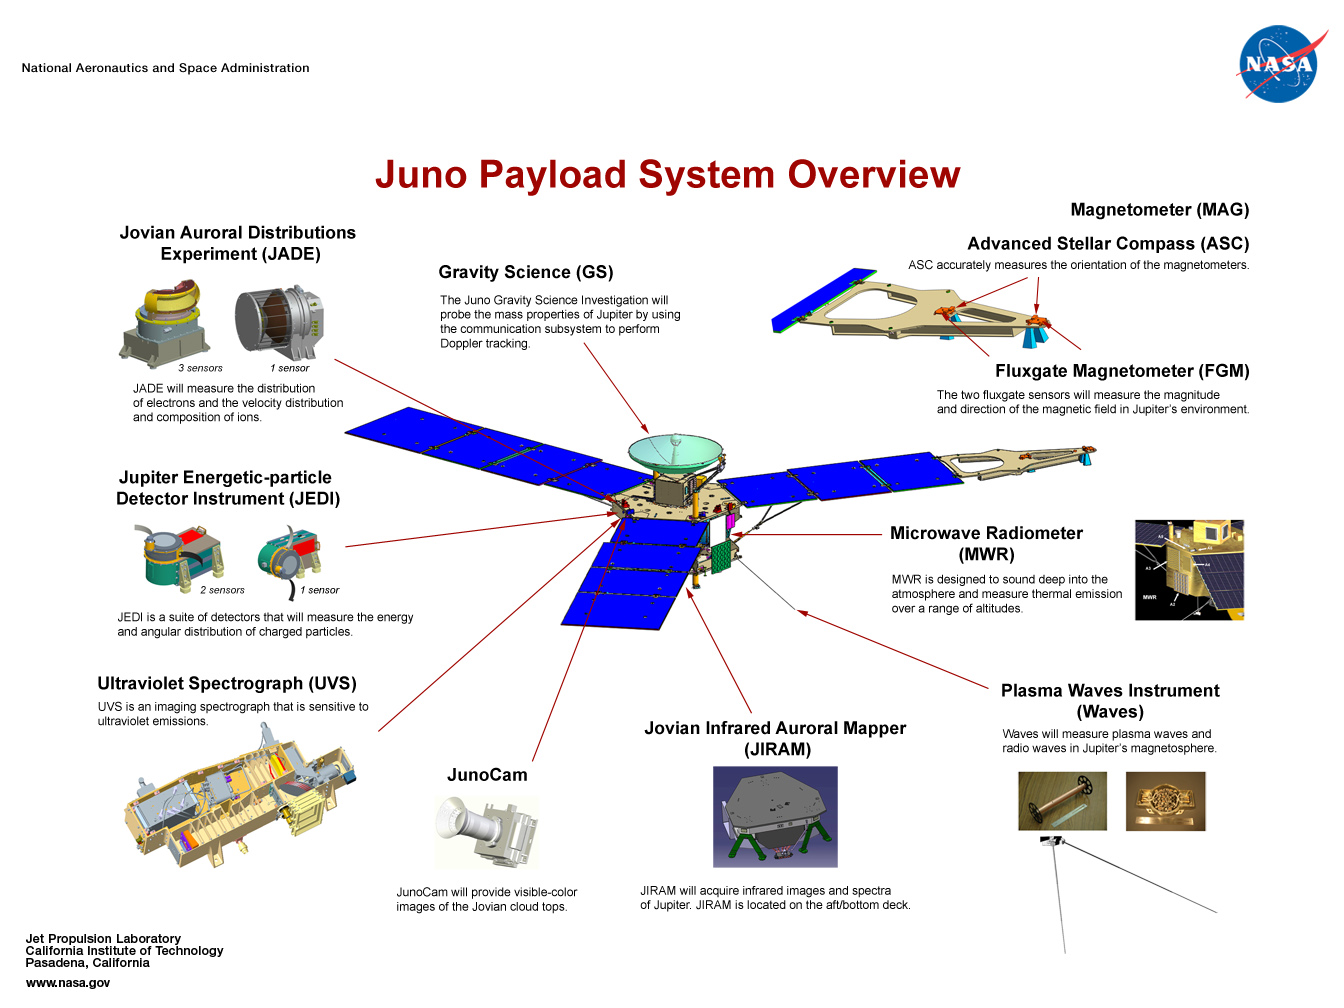 Juno's Science Instruments